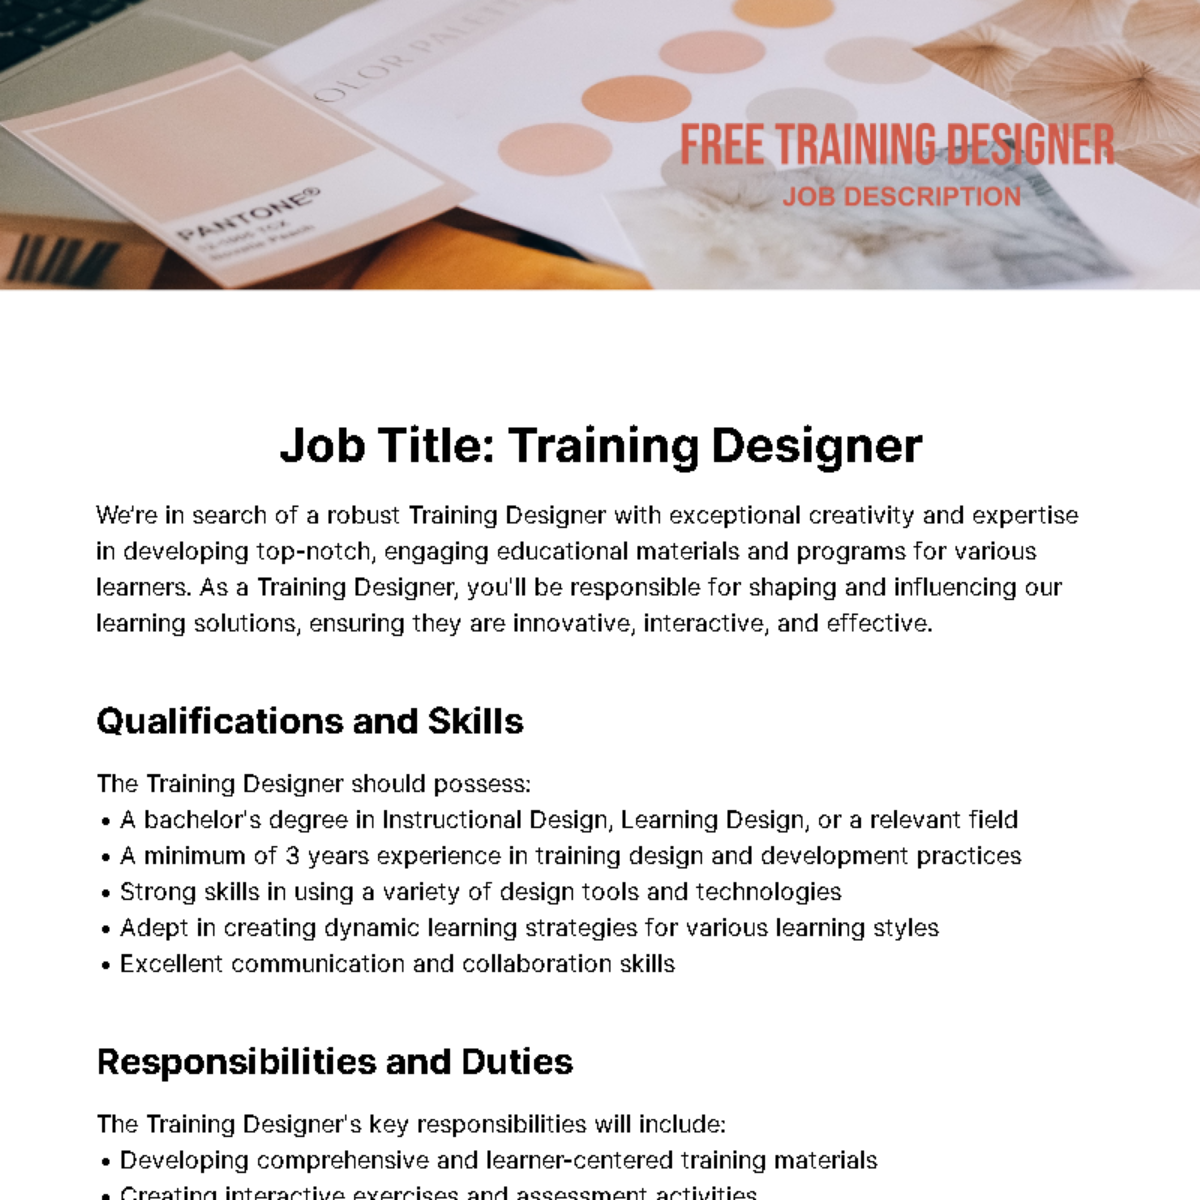 Free Training Designer Job Description Template